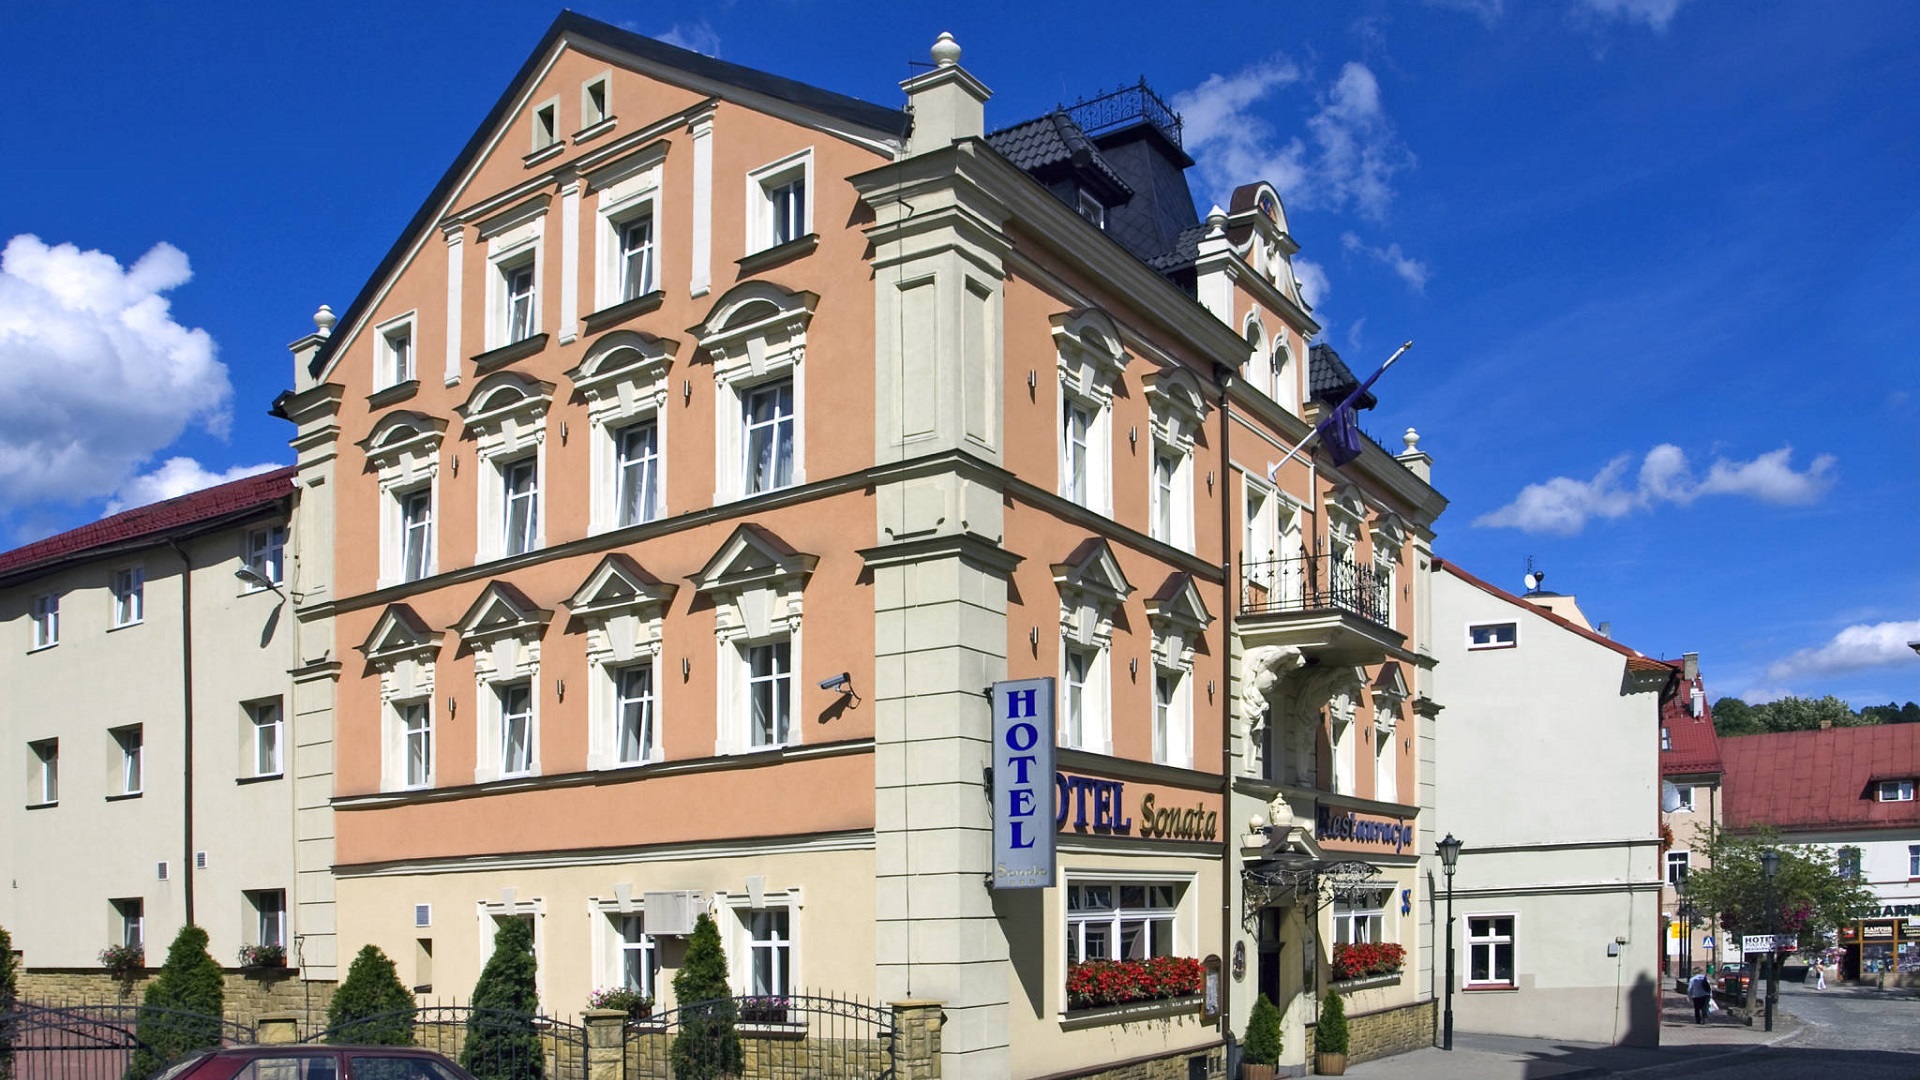 SONATA hotel Sudetenland Duszniki Zdrój holidays in Poland Polish tourism